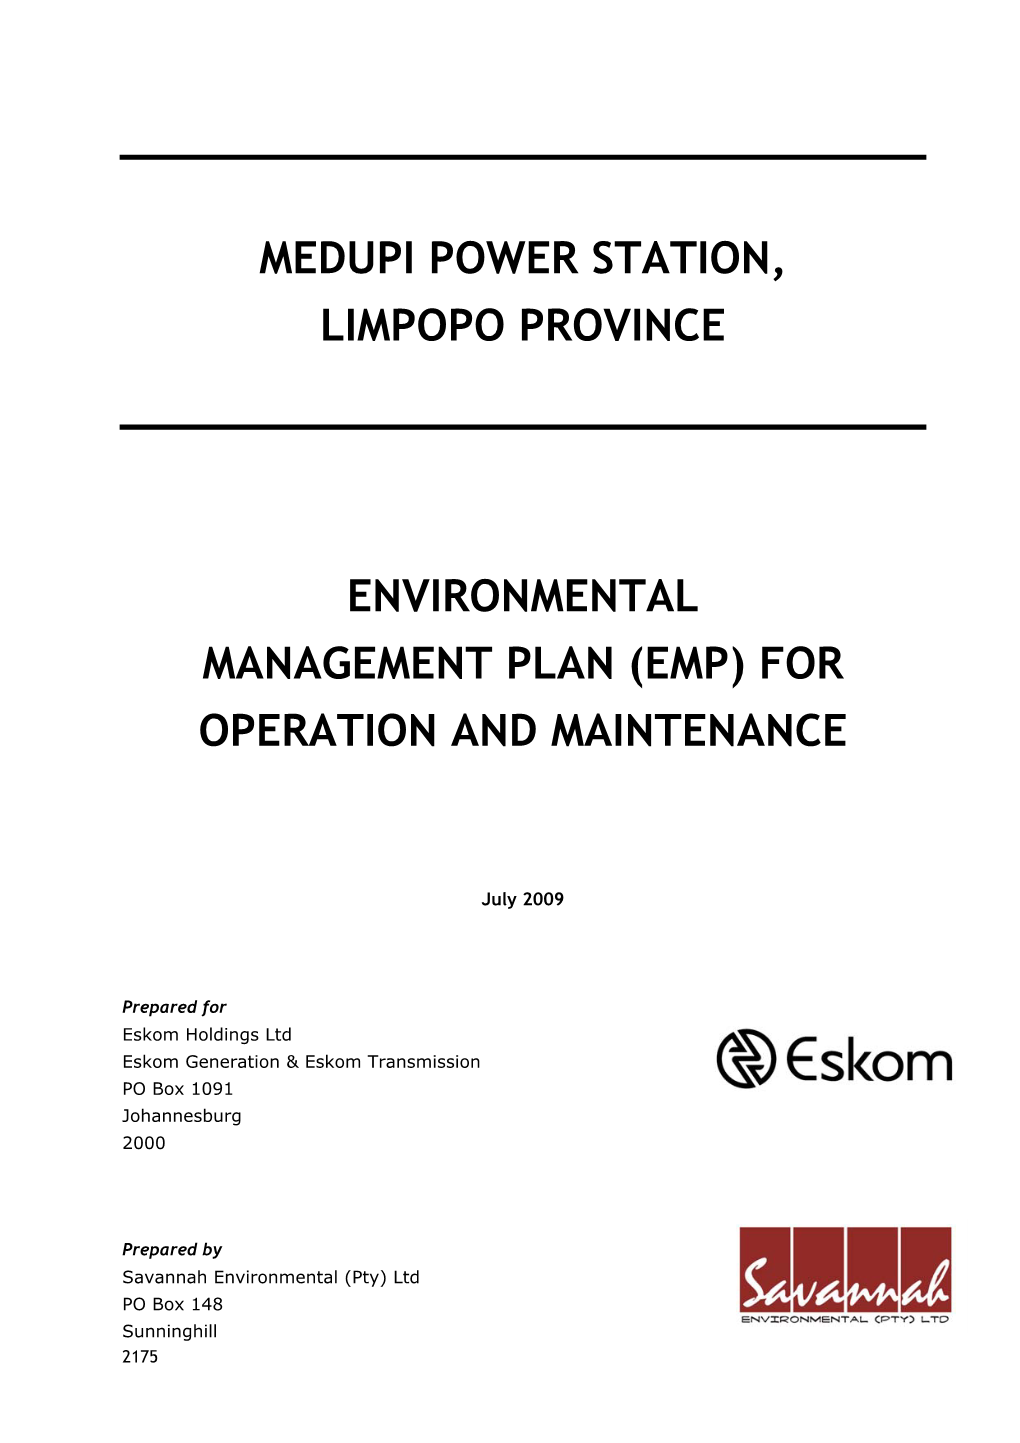 MEDUPI POWER STATION, LIMPOPO PROVINCE Environmental Management Plan for Operation and Maintenance July 2009